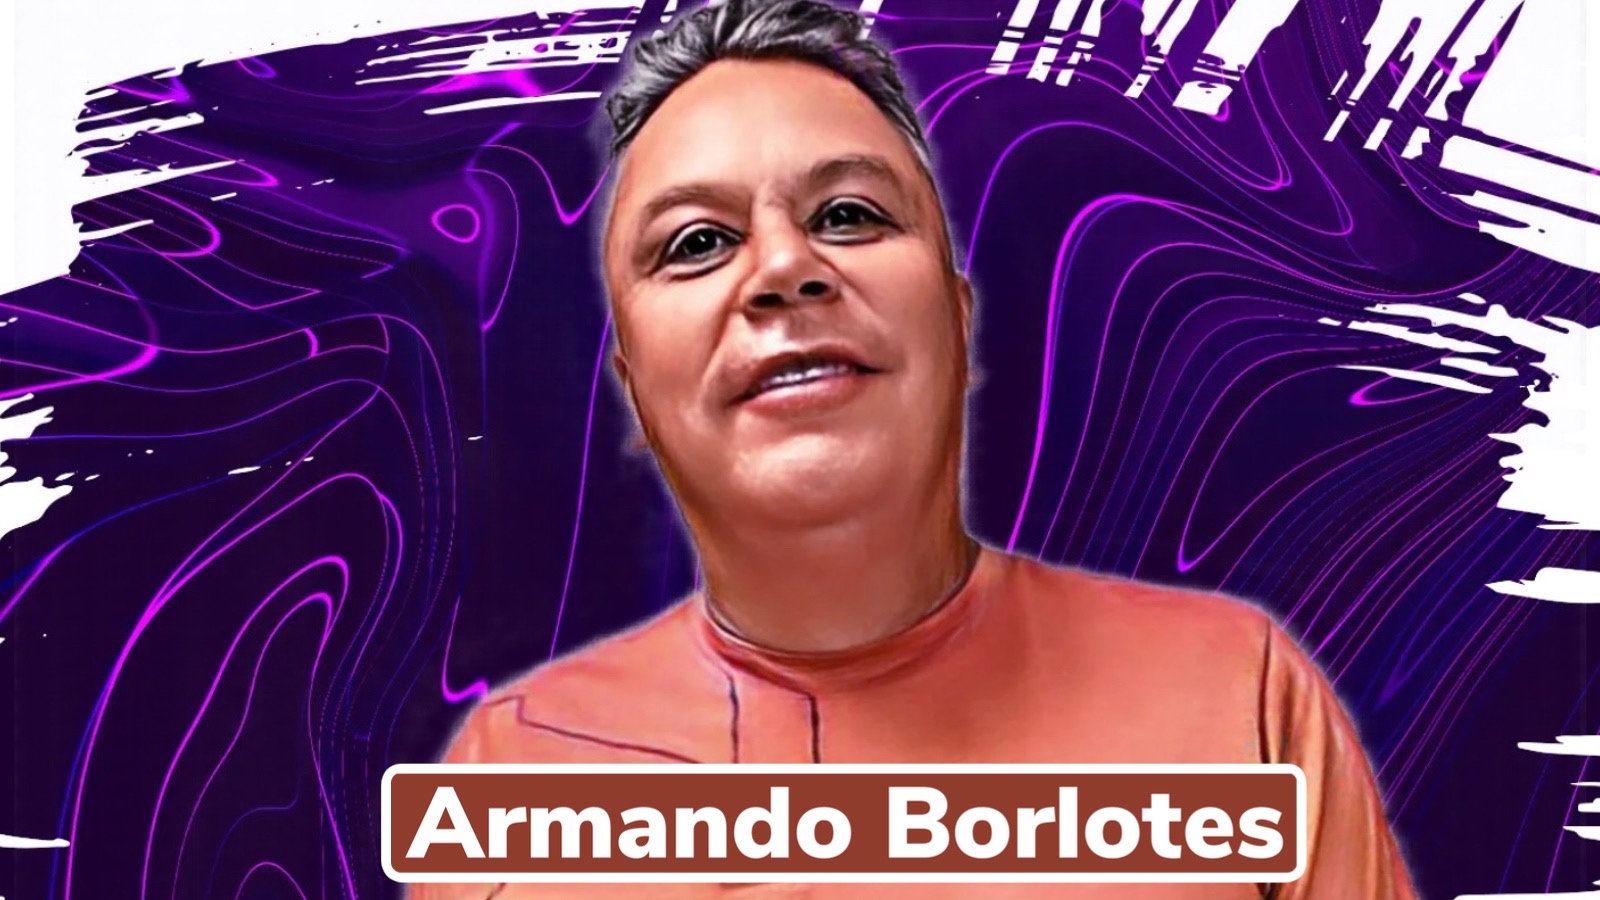 Armando Borlotes